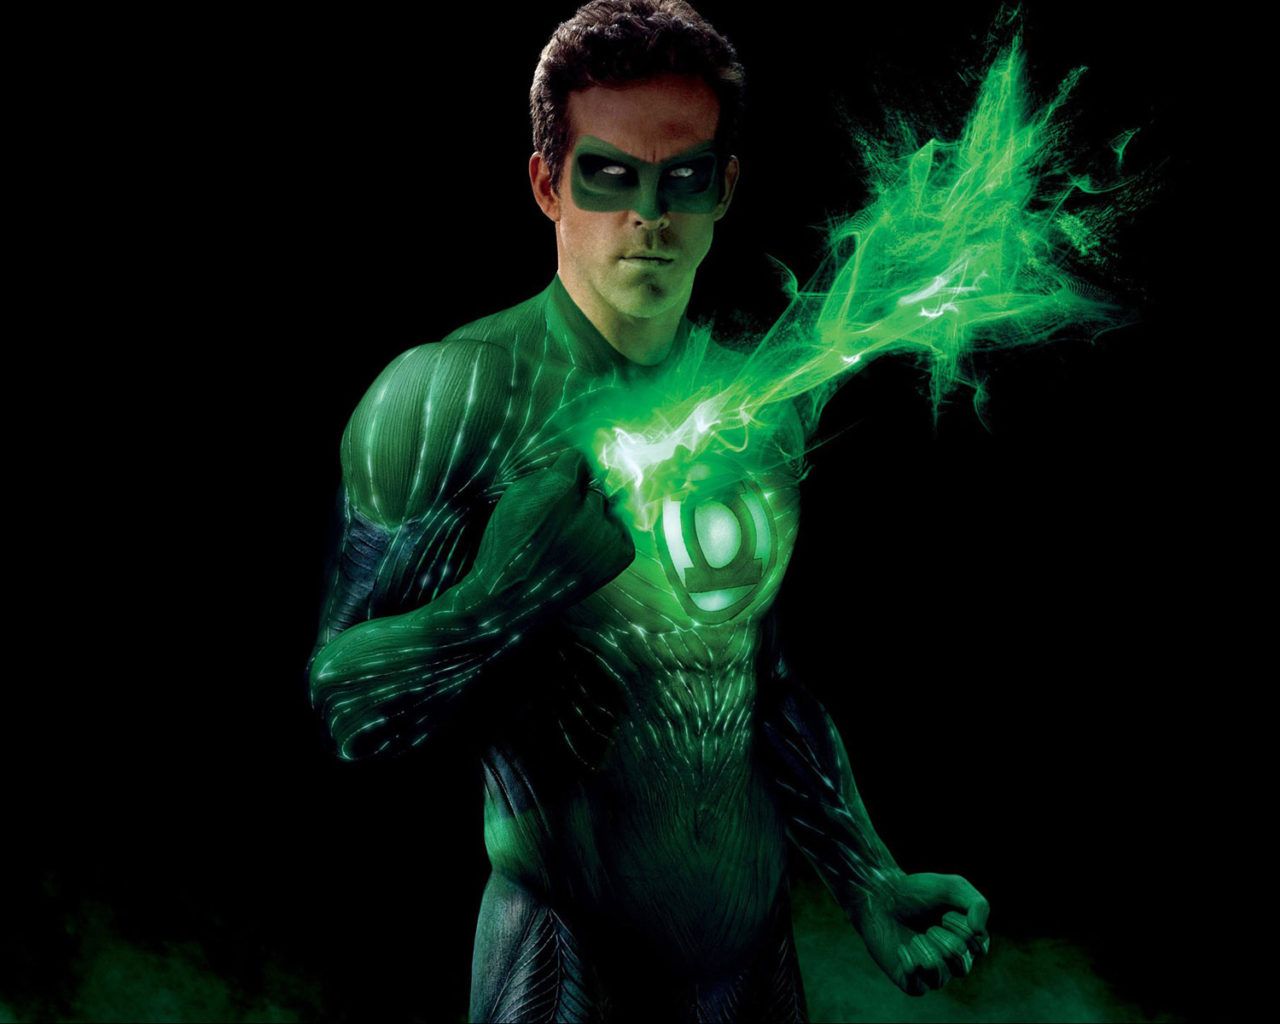 Green Lantern Hal Jordan Ryan Reynolds Story Of The Superhero On The Big Screen HD Wallpaper For Mobile Phones Tablet And Lapx1200, Wallpaper13.com